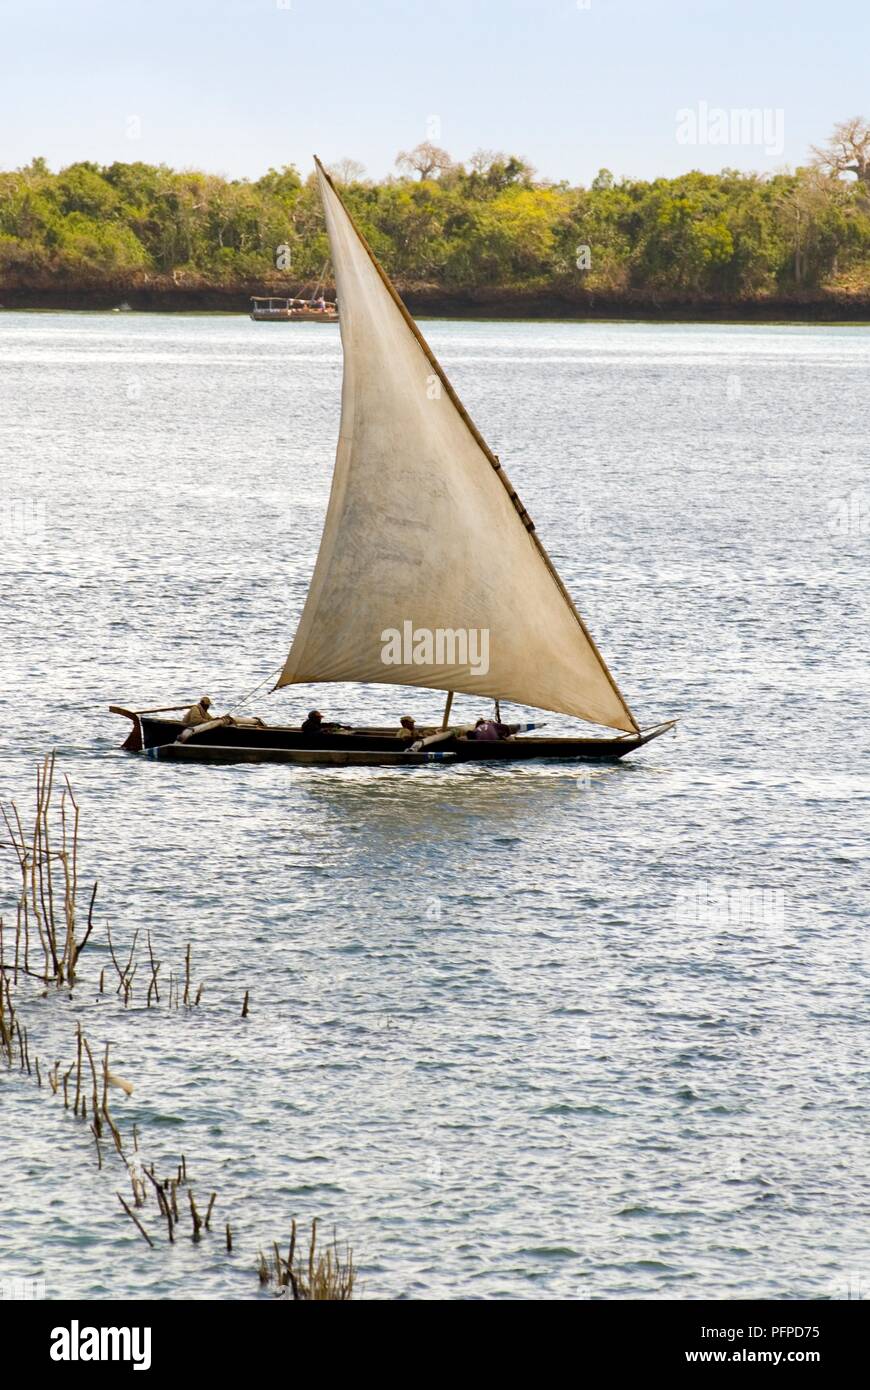 Kenya, Shimoni, dhow boat on river Stock Photo